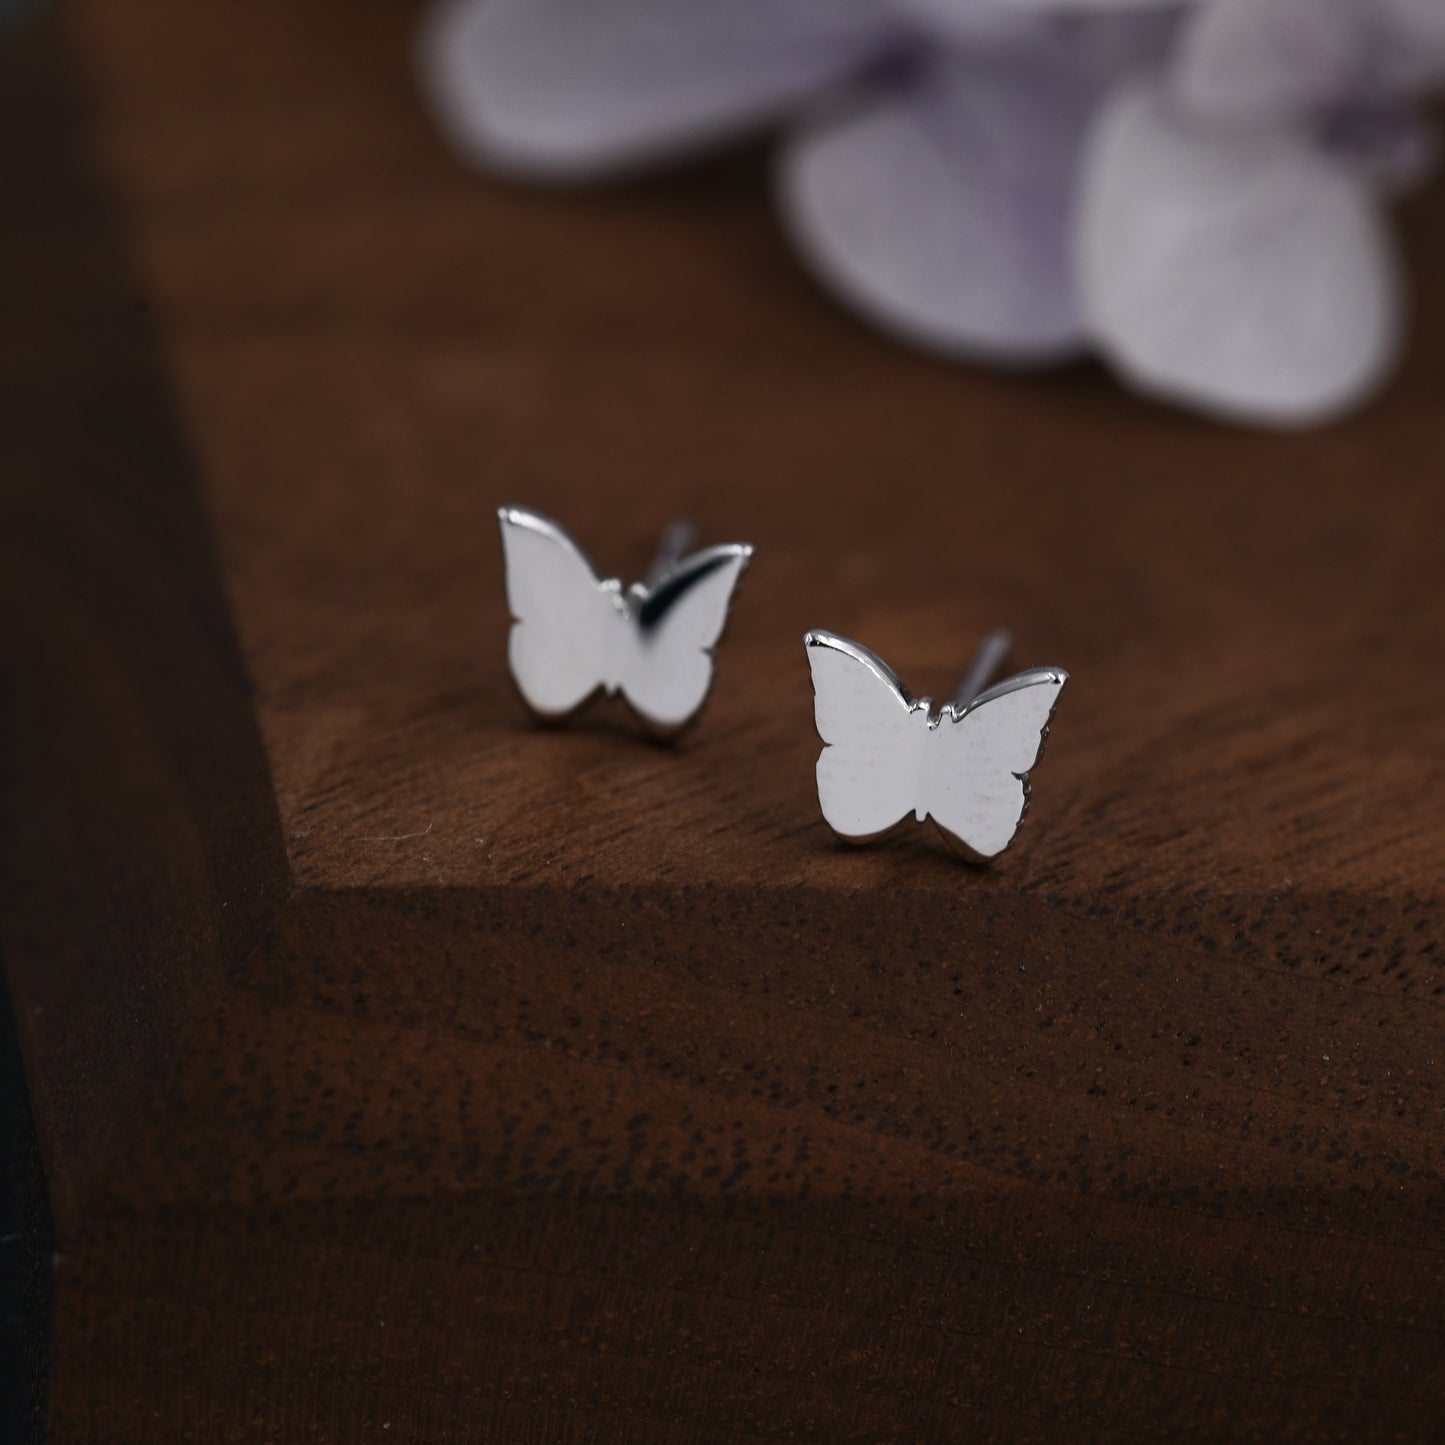 Small Pair Butterfly Stud Earrings in Sterling Silver, Silver, Gold or Rose Gold, Butterfly Earrings, Animal Earrings, Butterfly Earrings